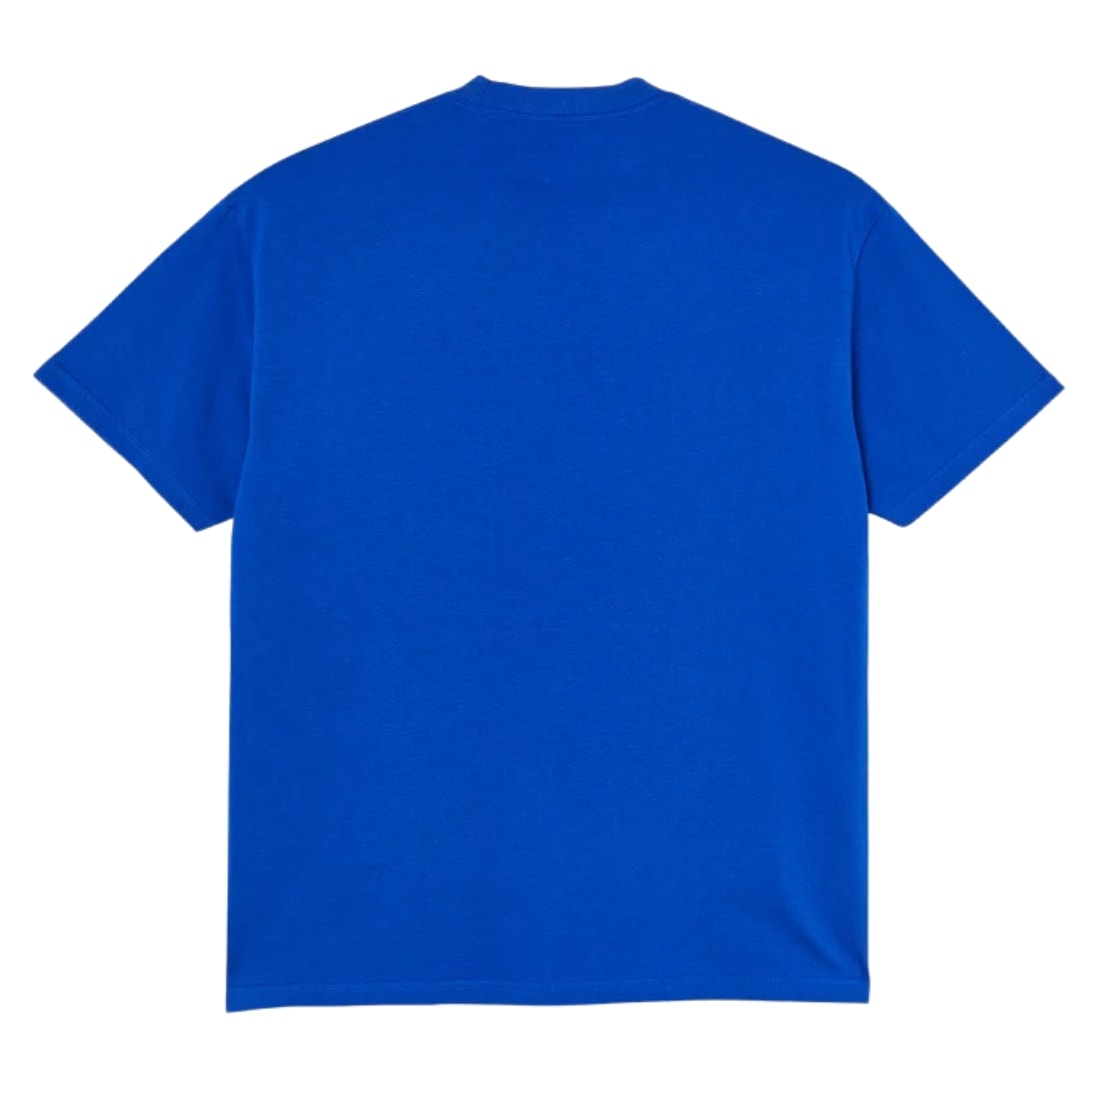 Polar Spiral Pocket T-Shirt - Royal Blue - Mens Pocket T-Shirt by Polar